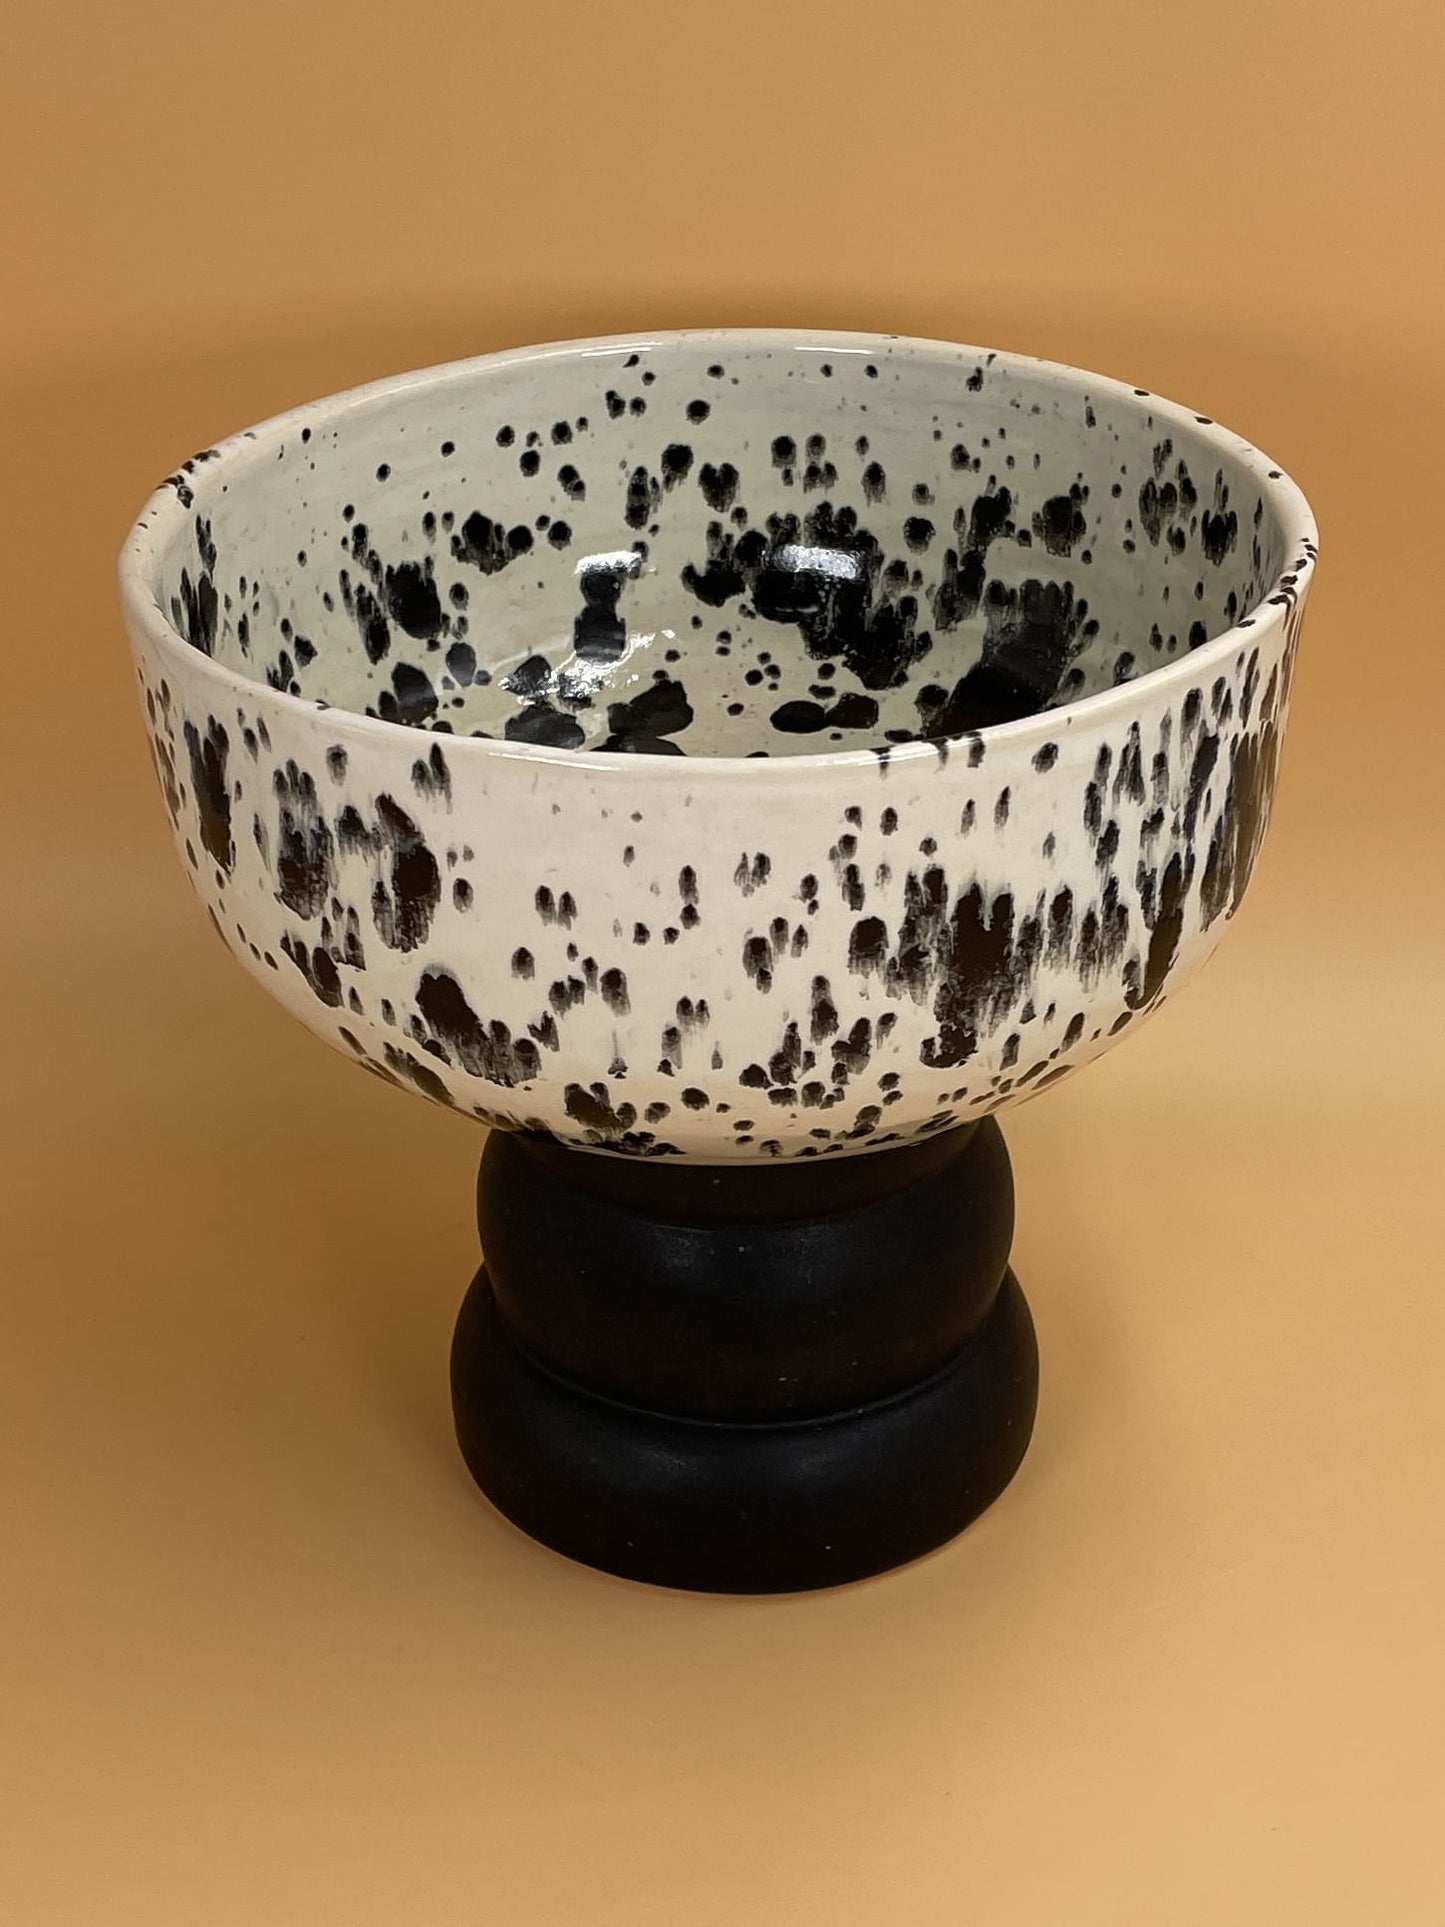 Wavy Fingers Fruit Bowl on Pedestal | Spotted Black & White